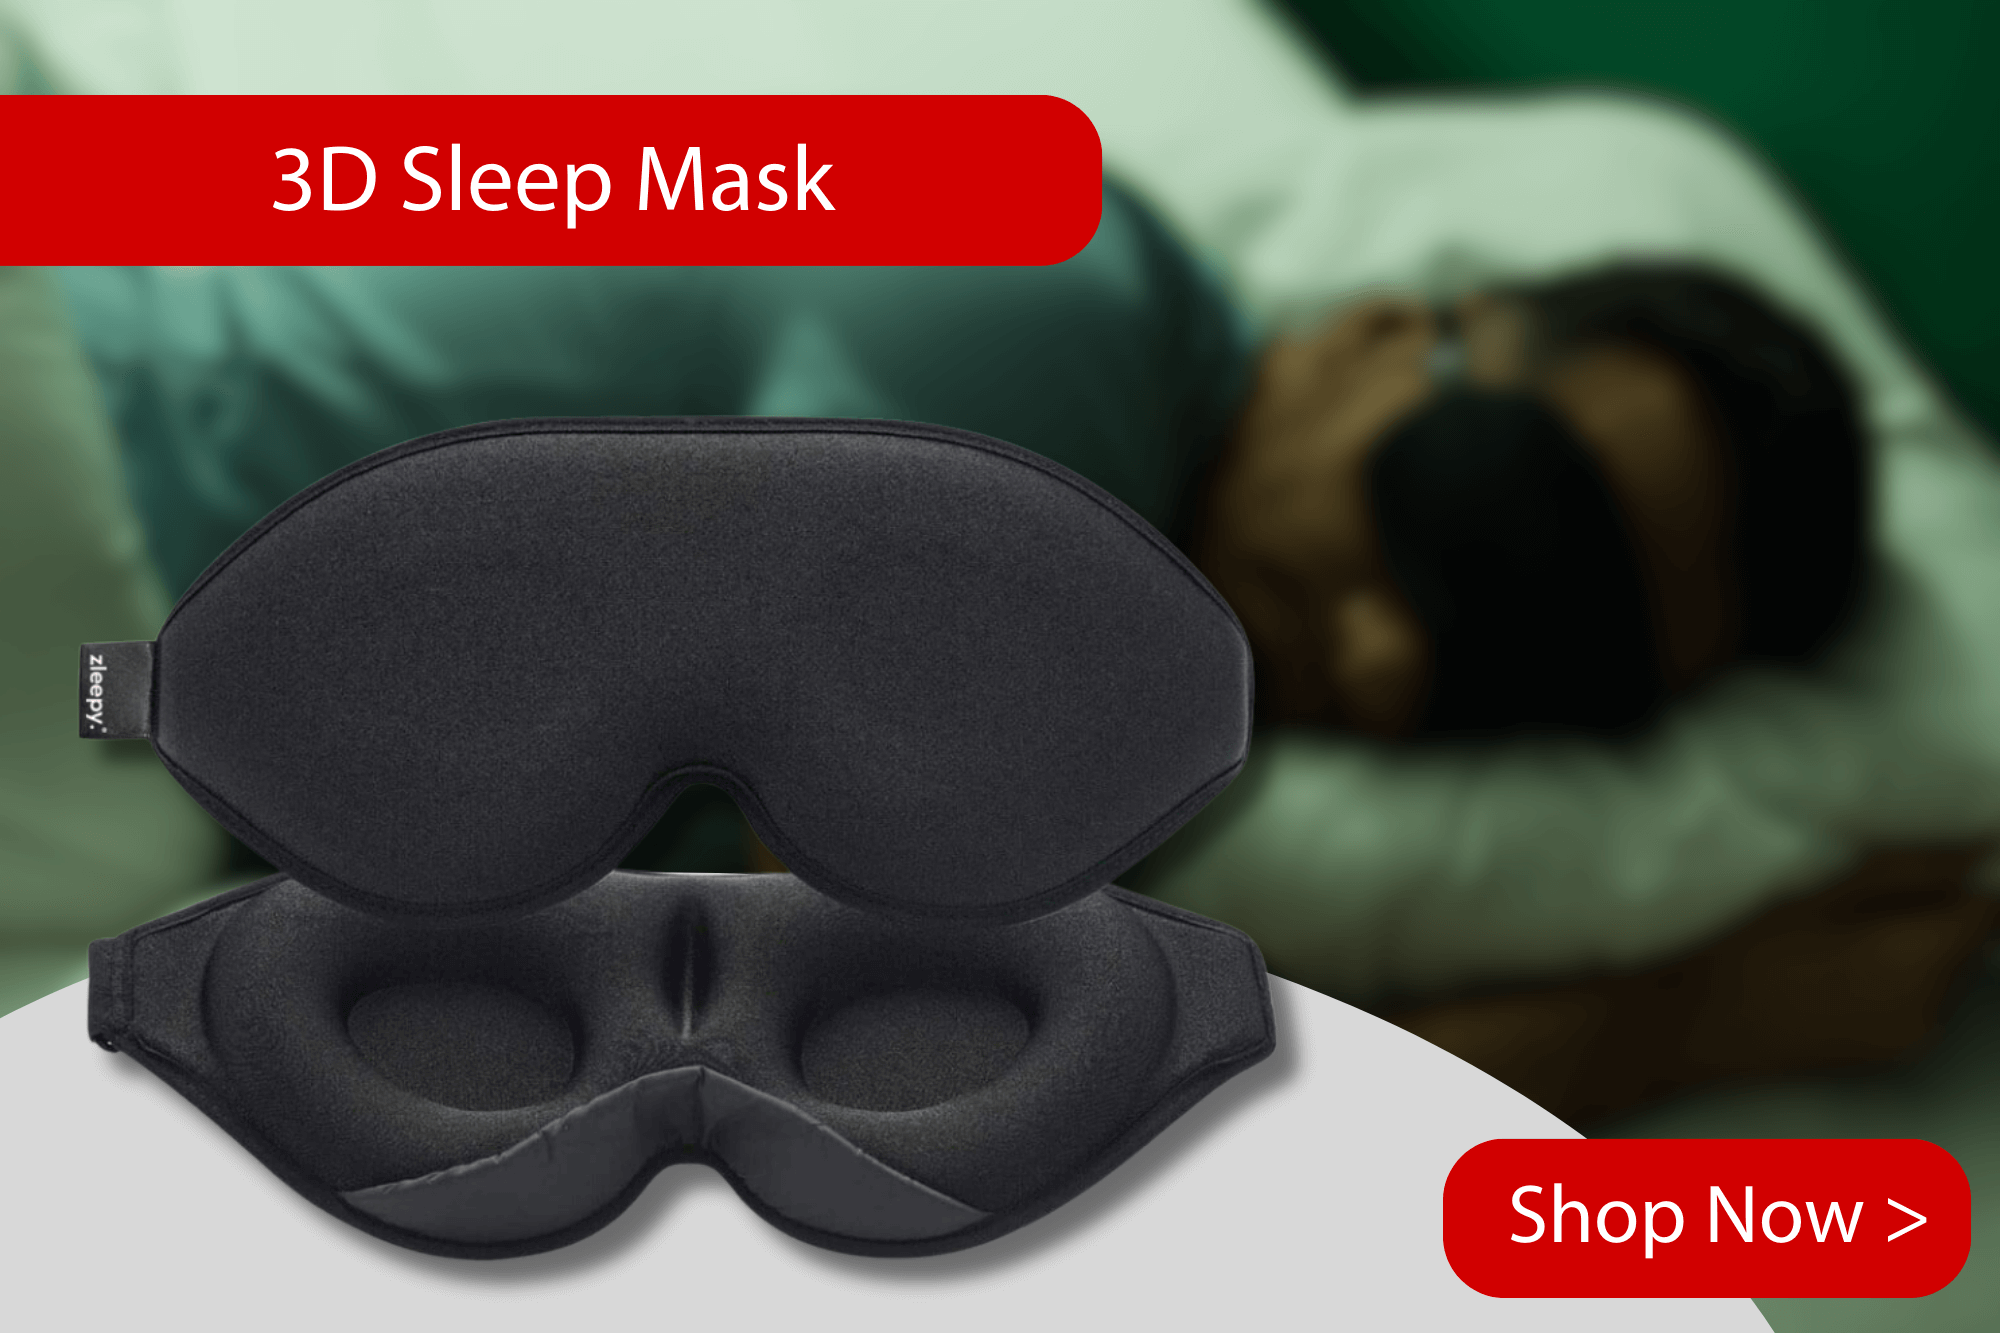 3D Sleep Mask with no Bluetooth